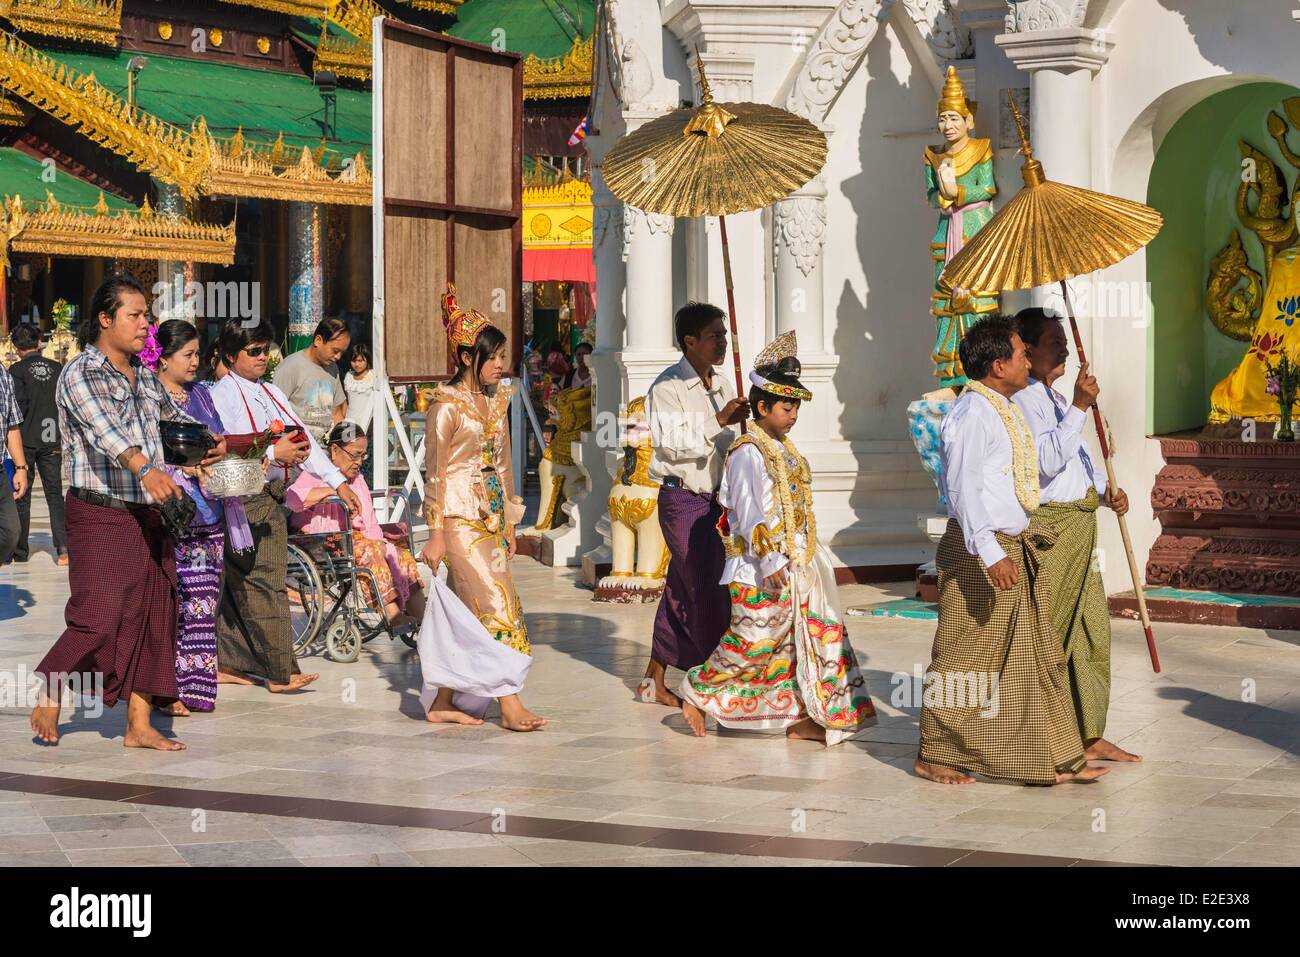 Myanmar (Burma) Yangon Division Yangon Singuttara Hügel in der Shwedagon Pagode Novize während eine Initiationszeremonie Stockfoto